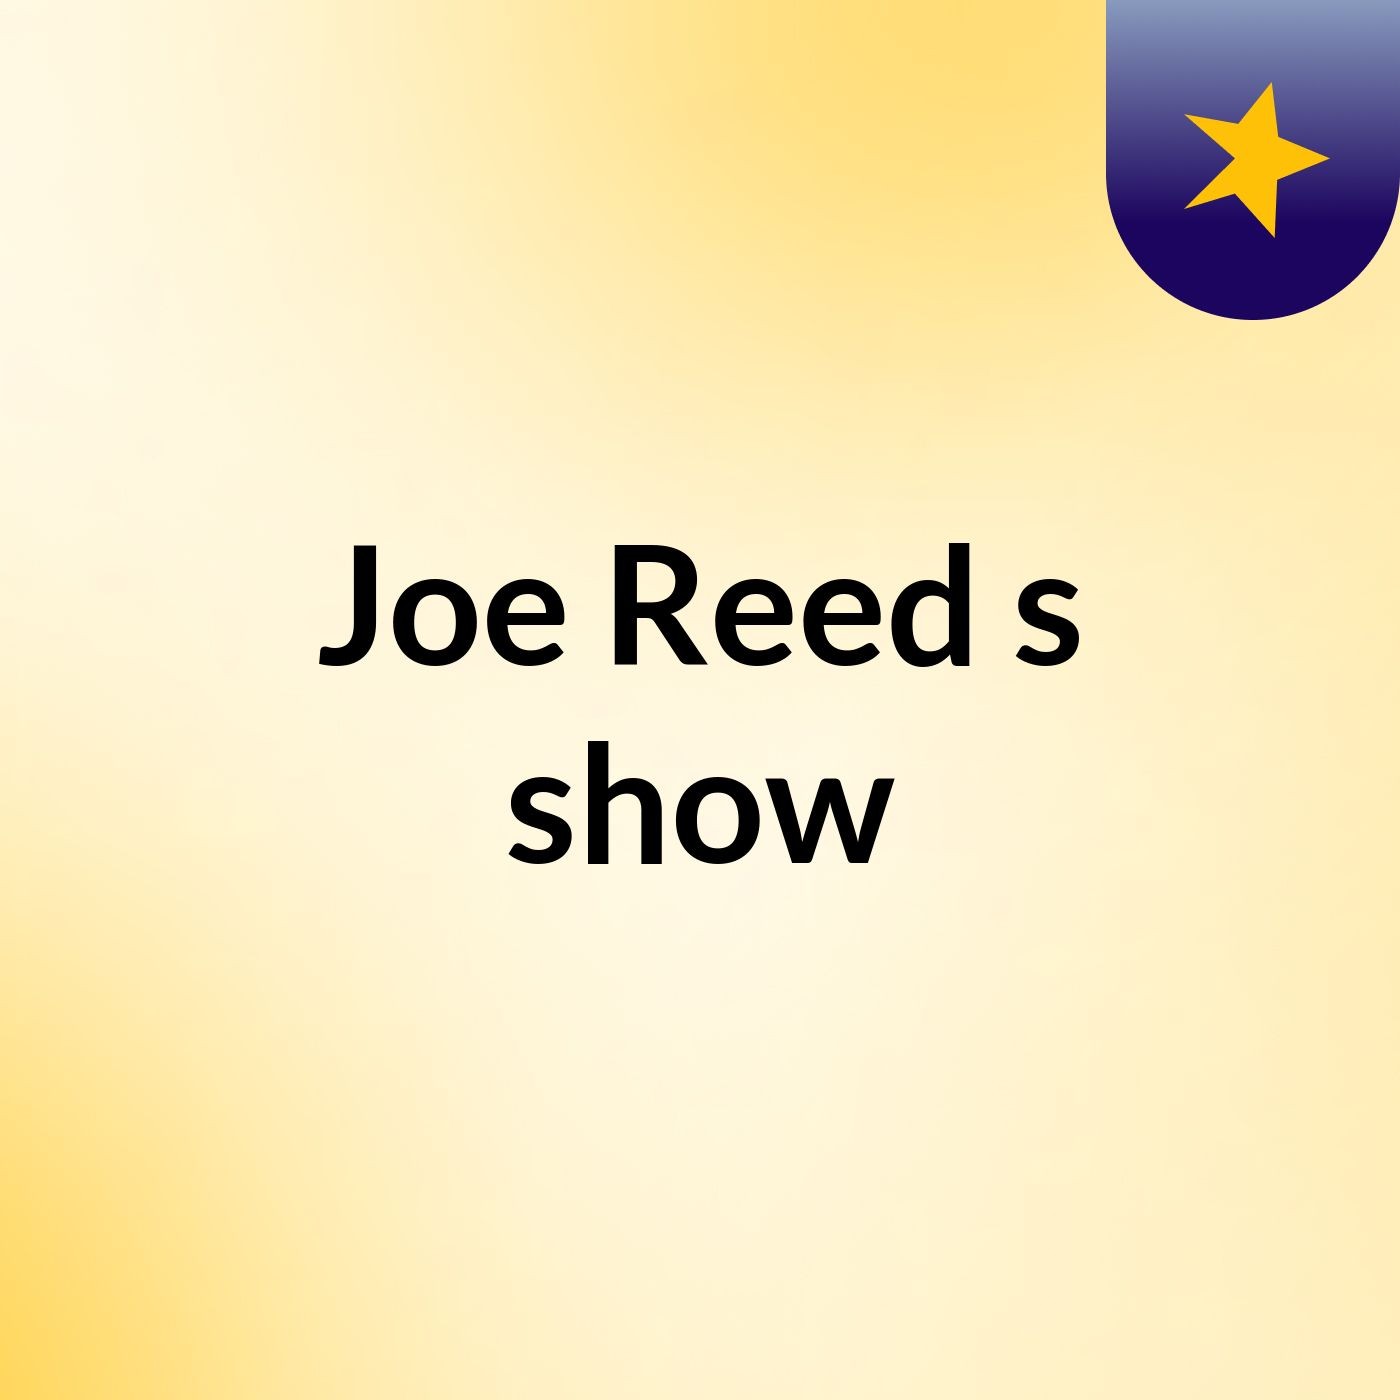 Joe Reed's show